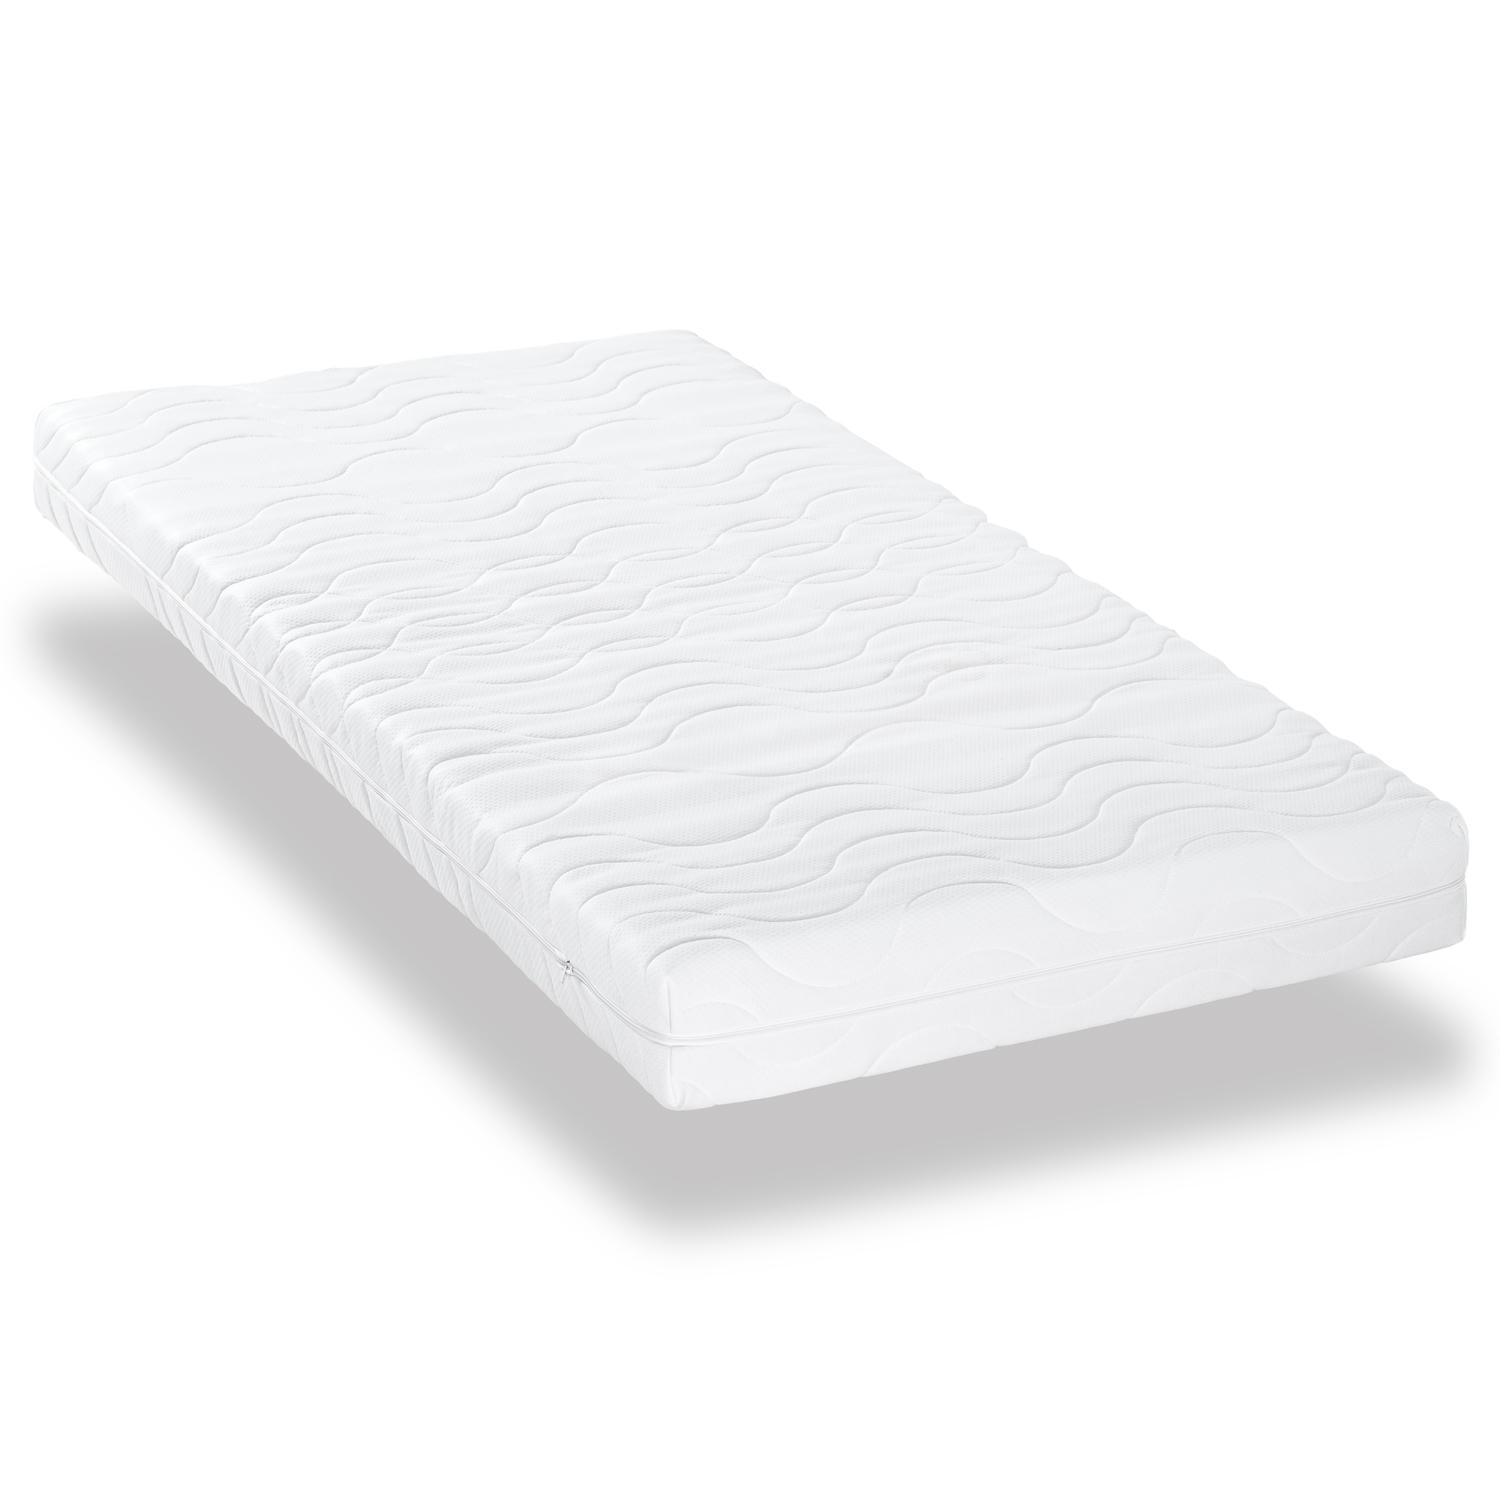 Premium 7-zone mattress 90x200 cm CloudComfort, height 15 cm, firmness level H2/H3